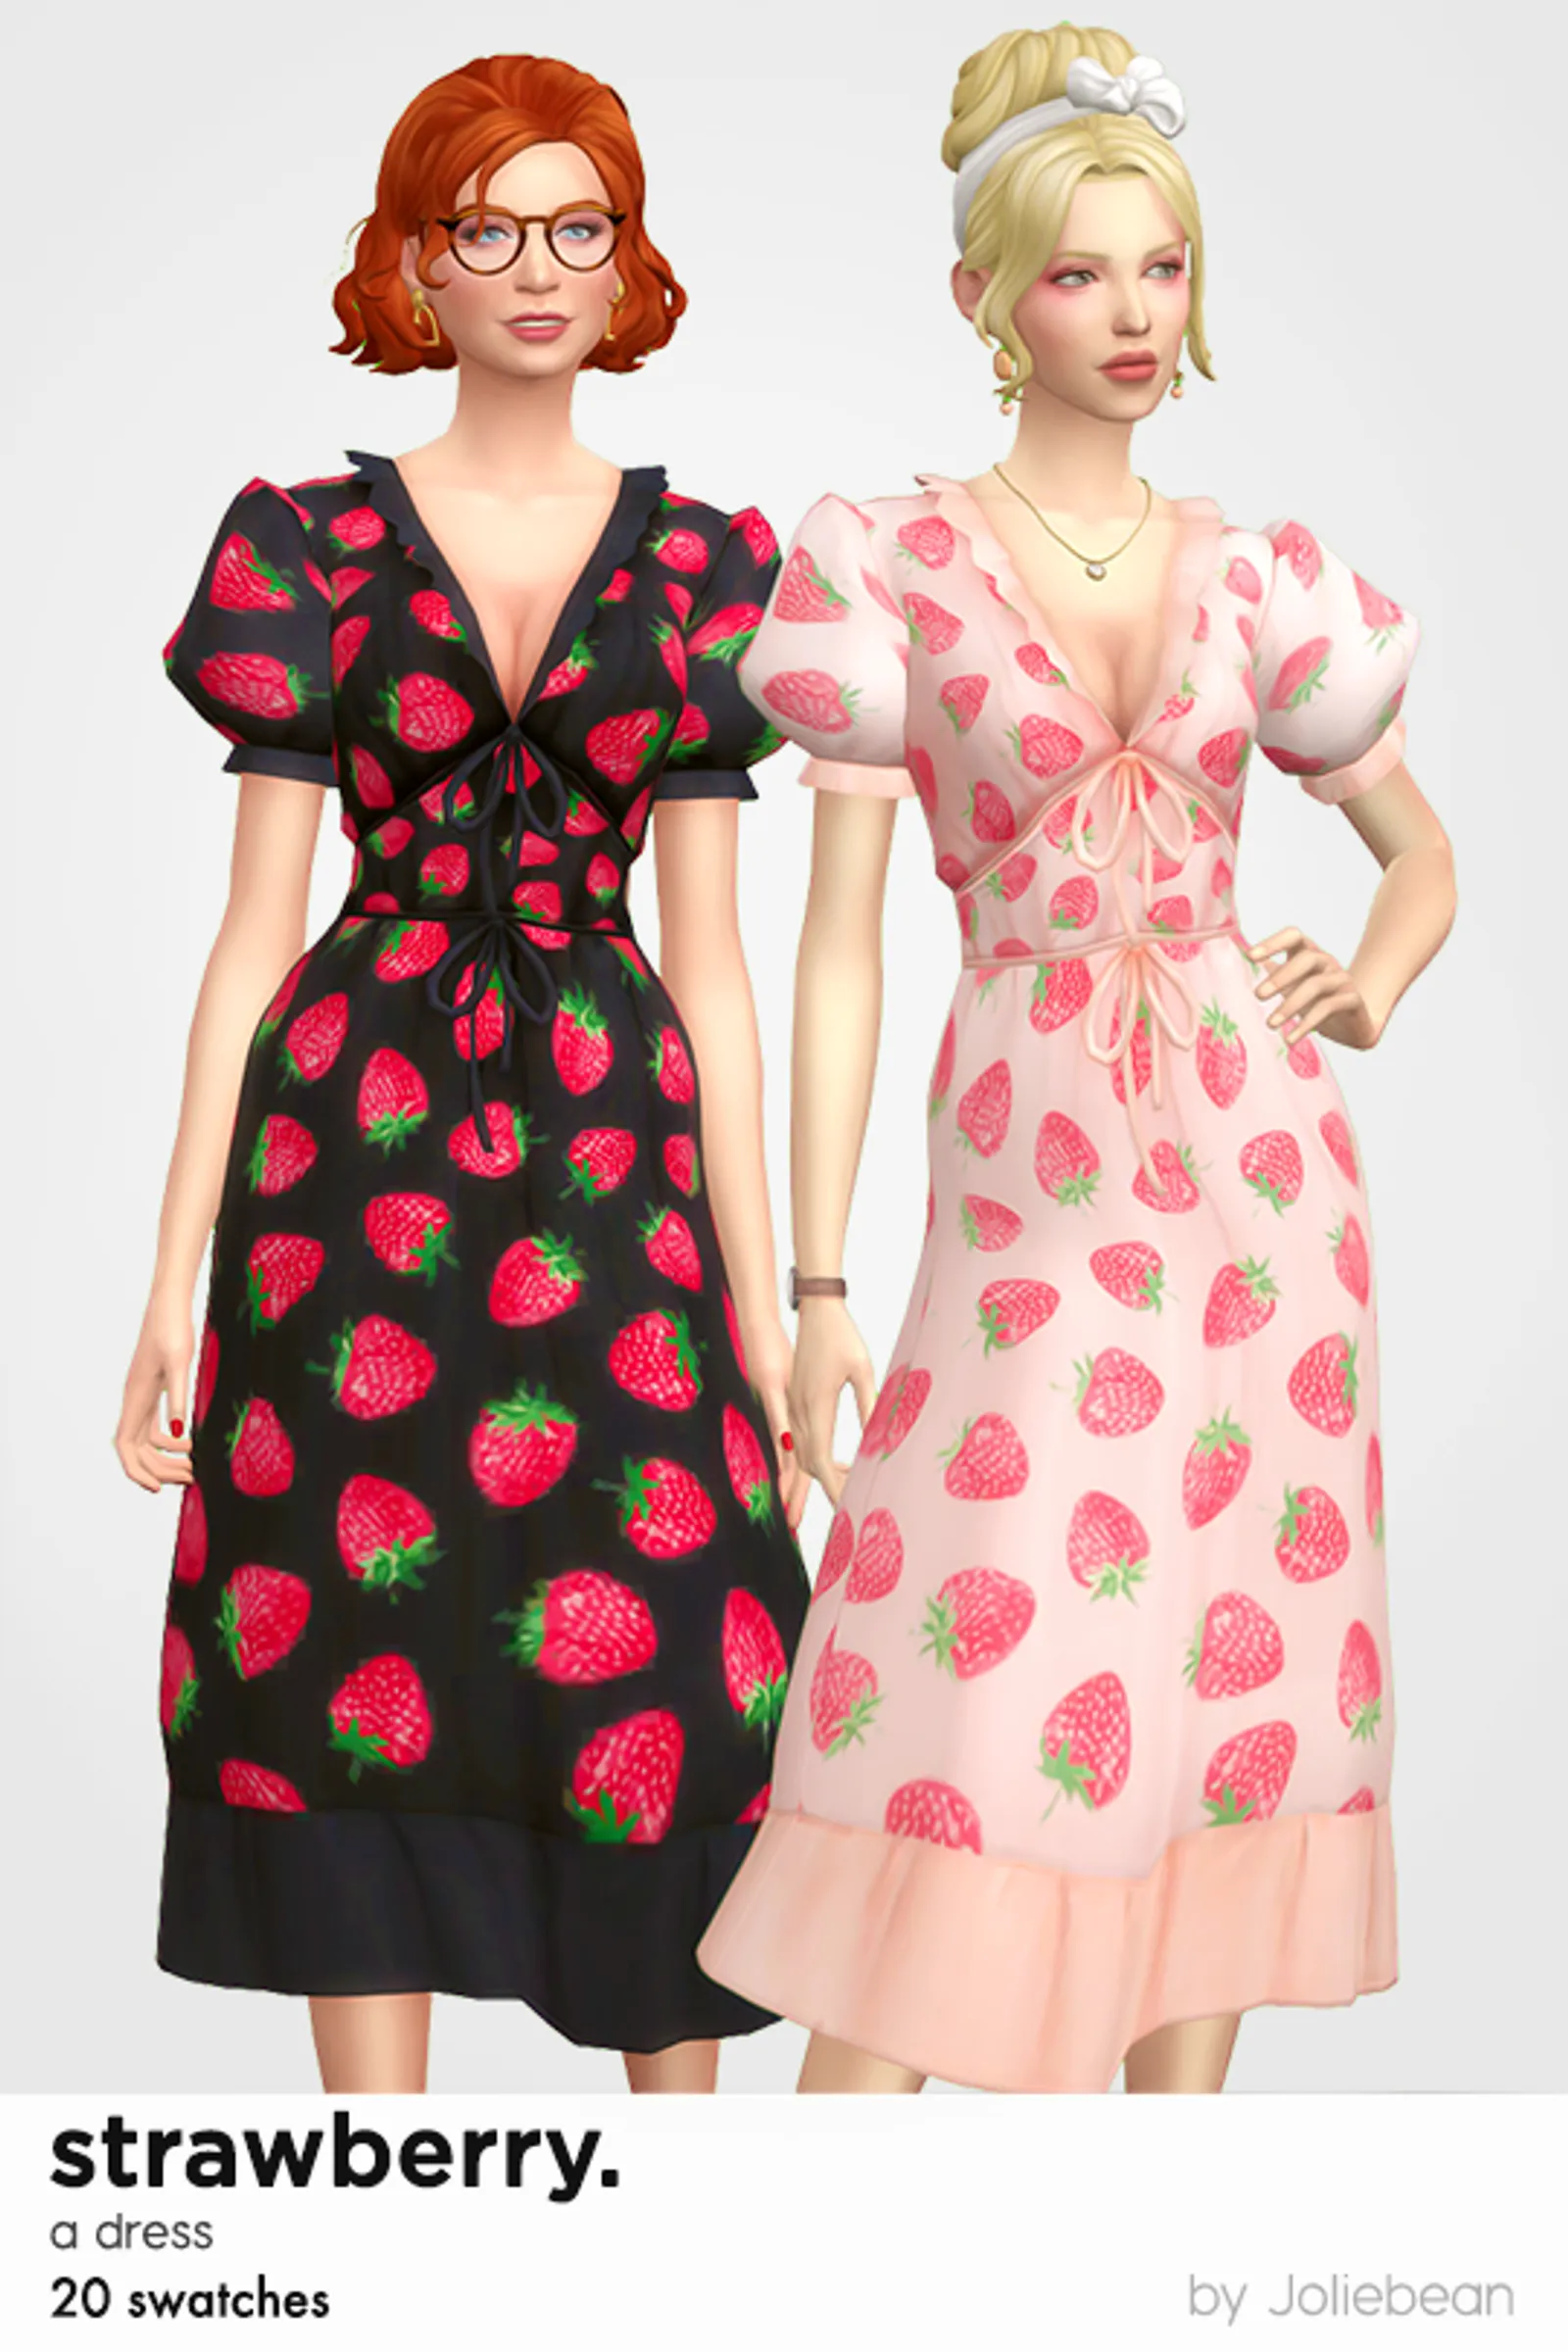 Strawberry dress by Joliebean